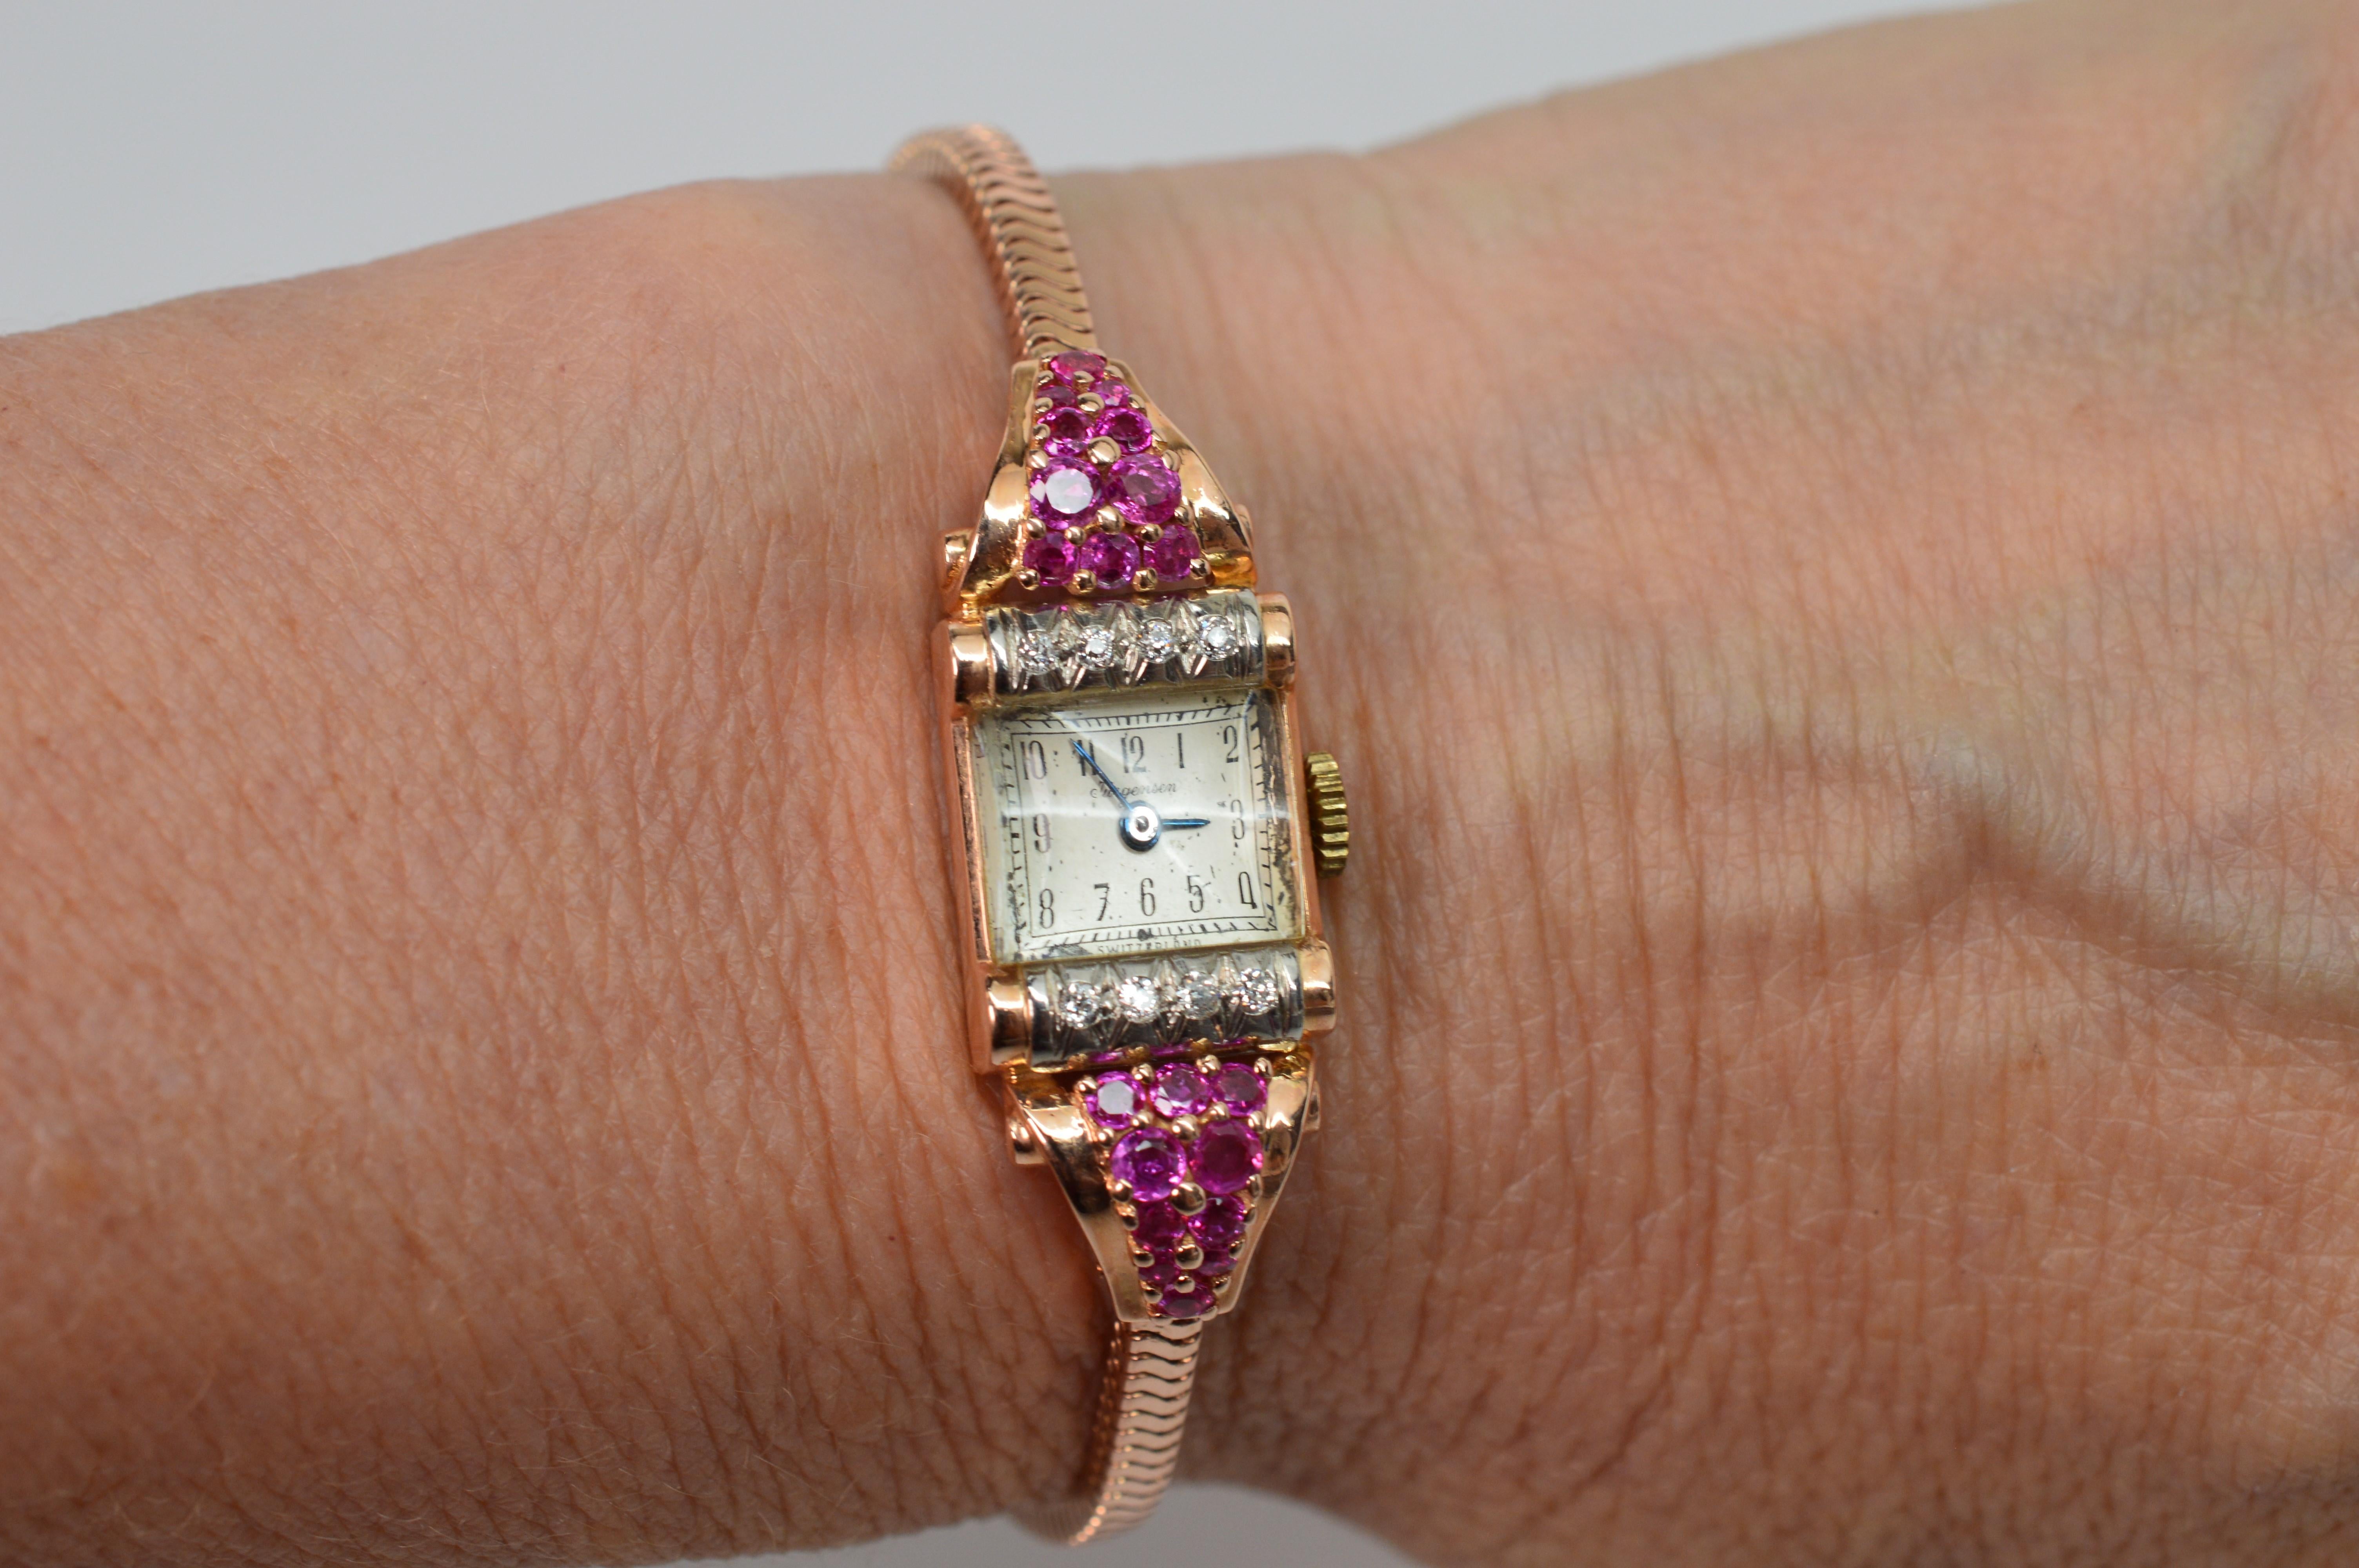 jules jurgensen 14k gold watch with diamonds